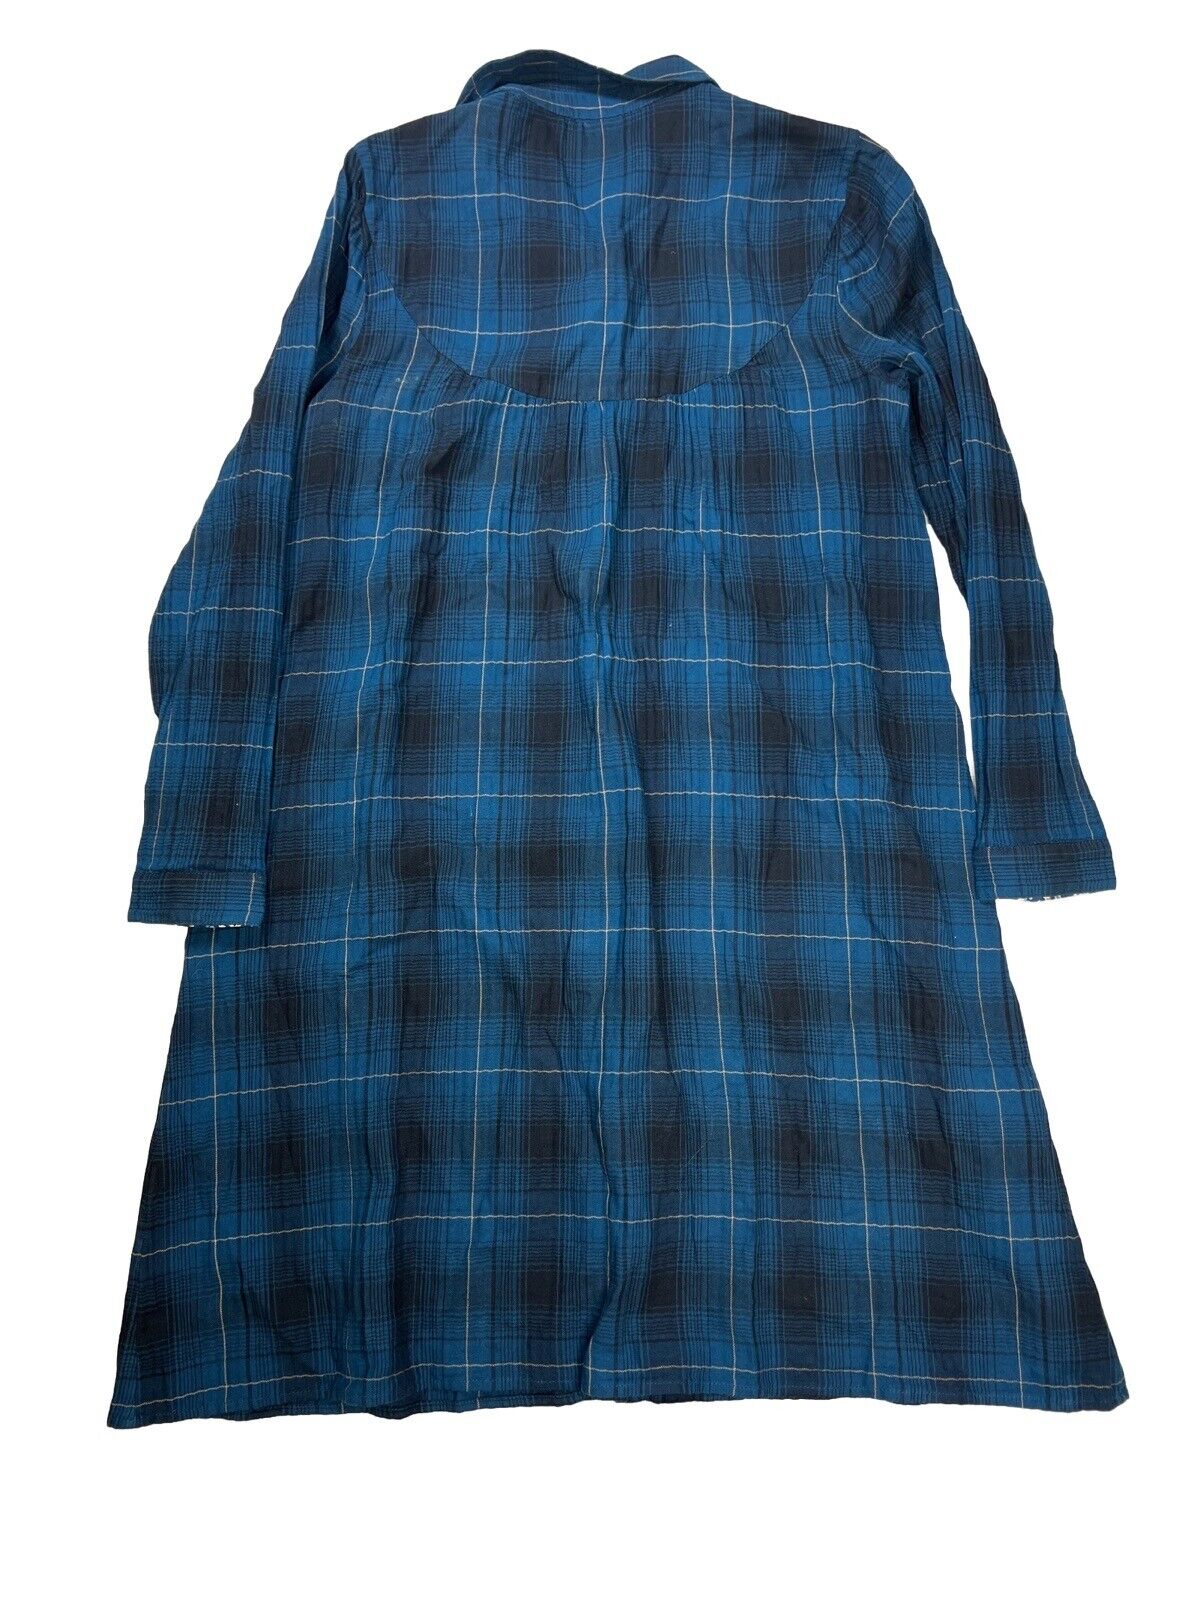 J. Jill Vestido camisero de manga larga con botones a cuadros azules para mujer - XS